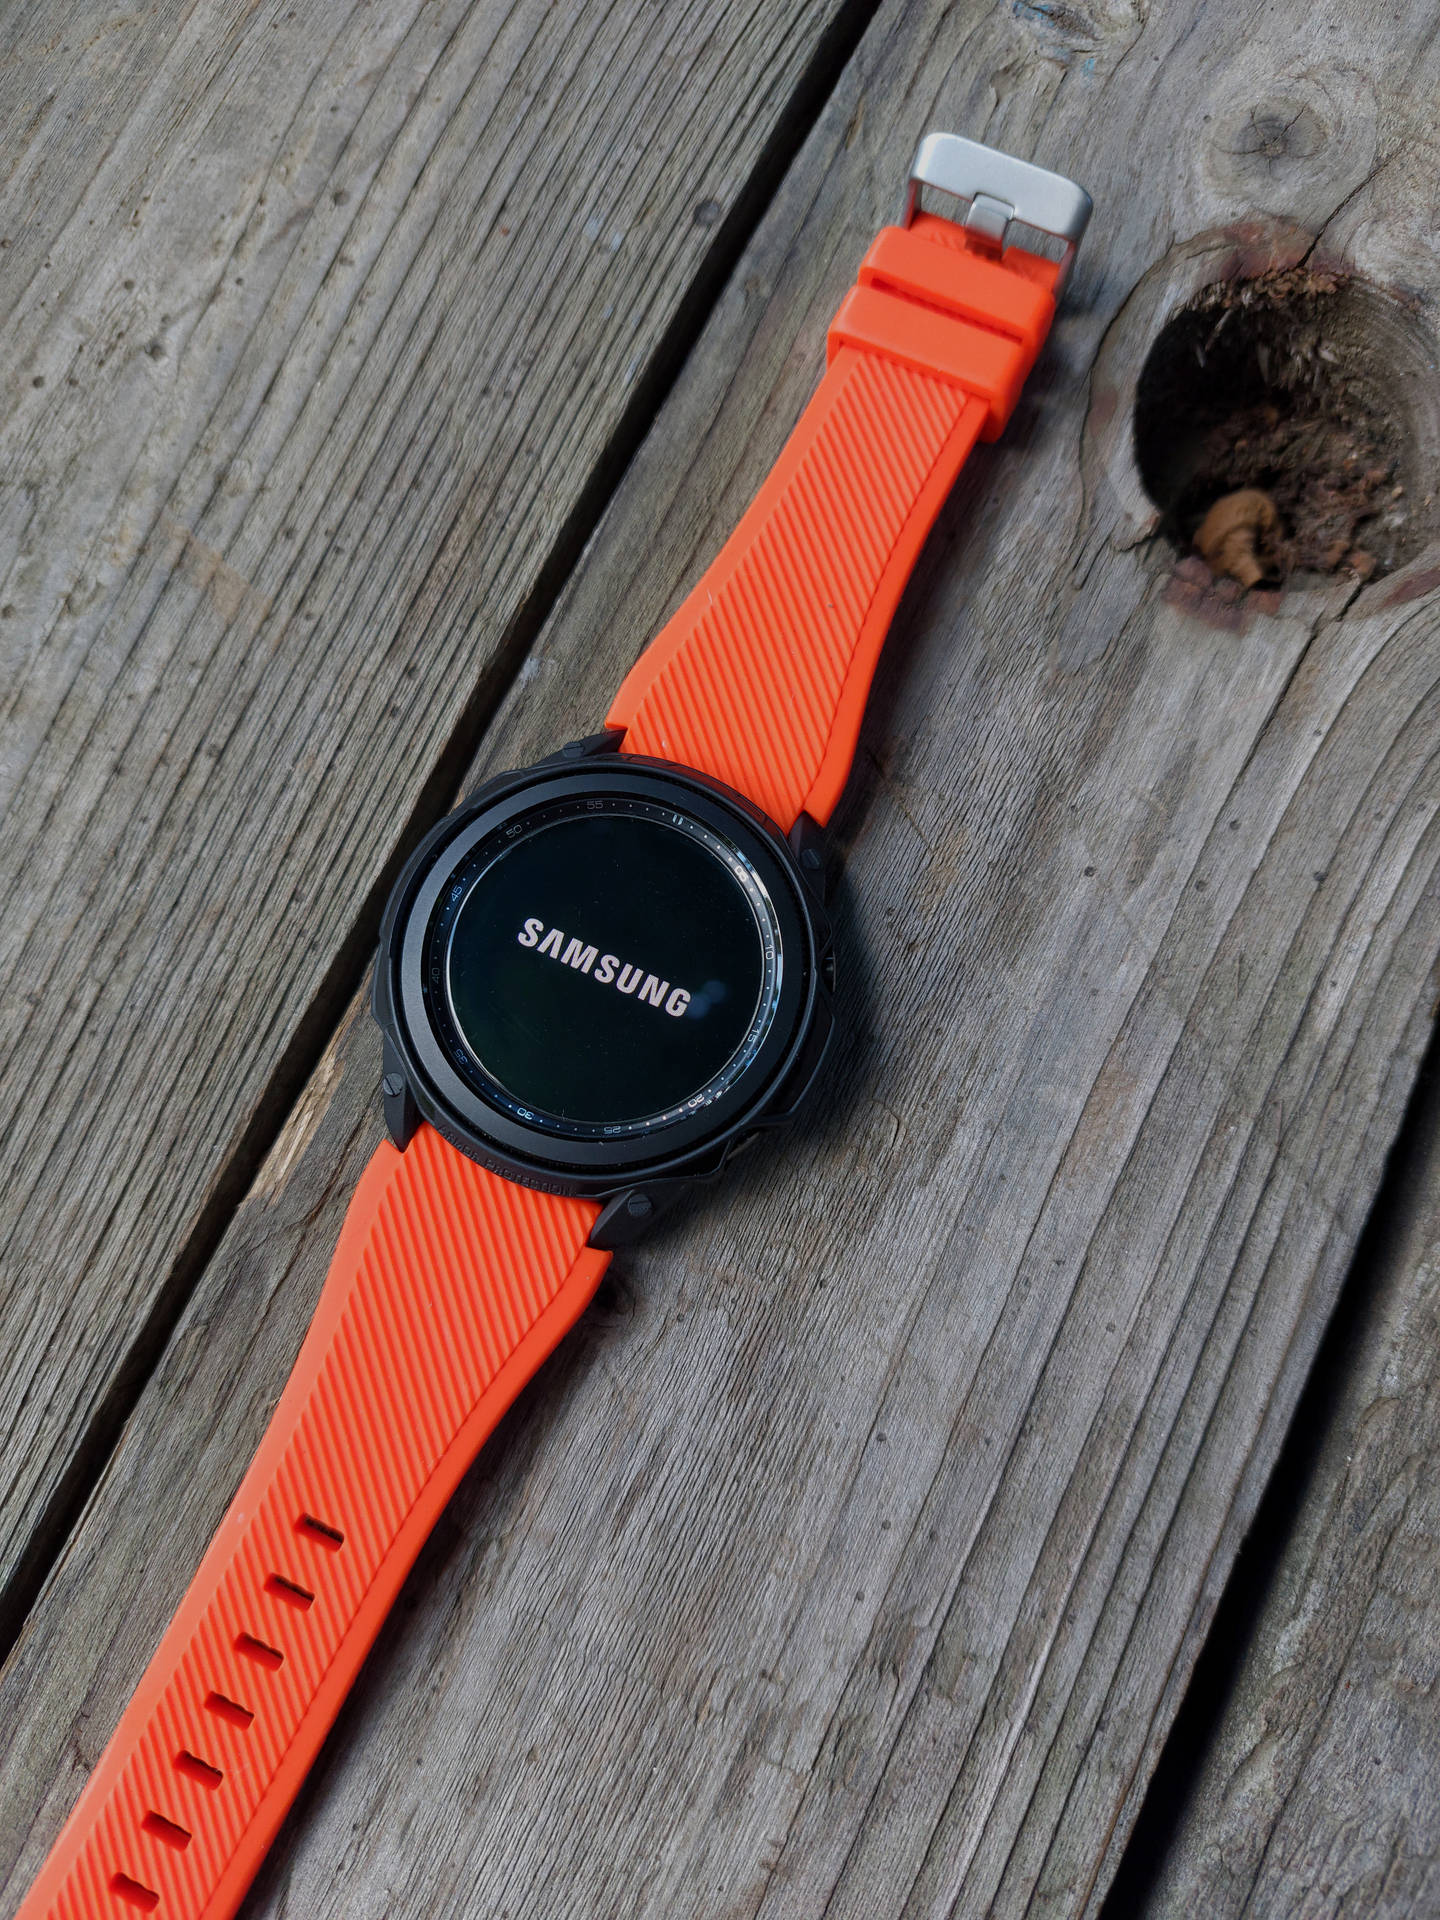 Samsung Smartwatch With Orange Band Wallpaper